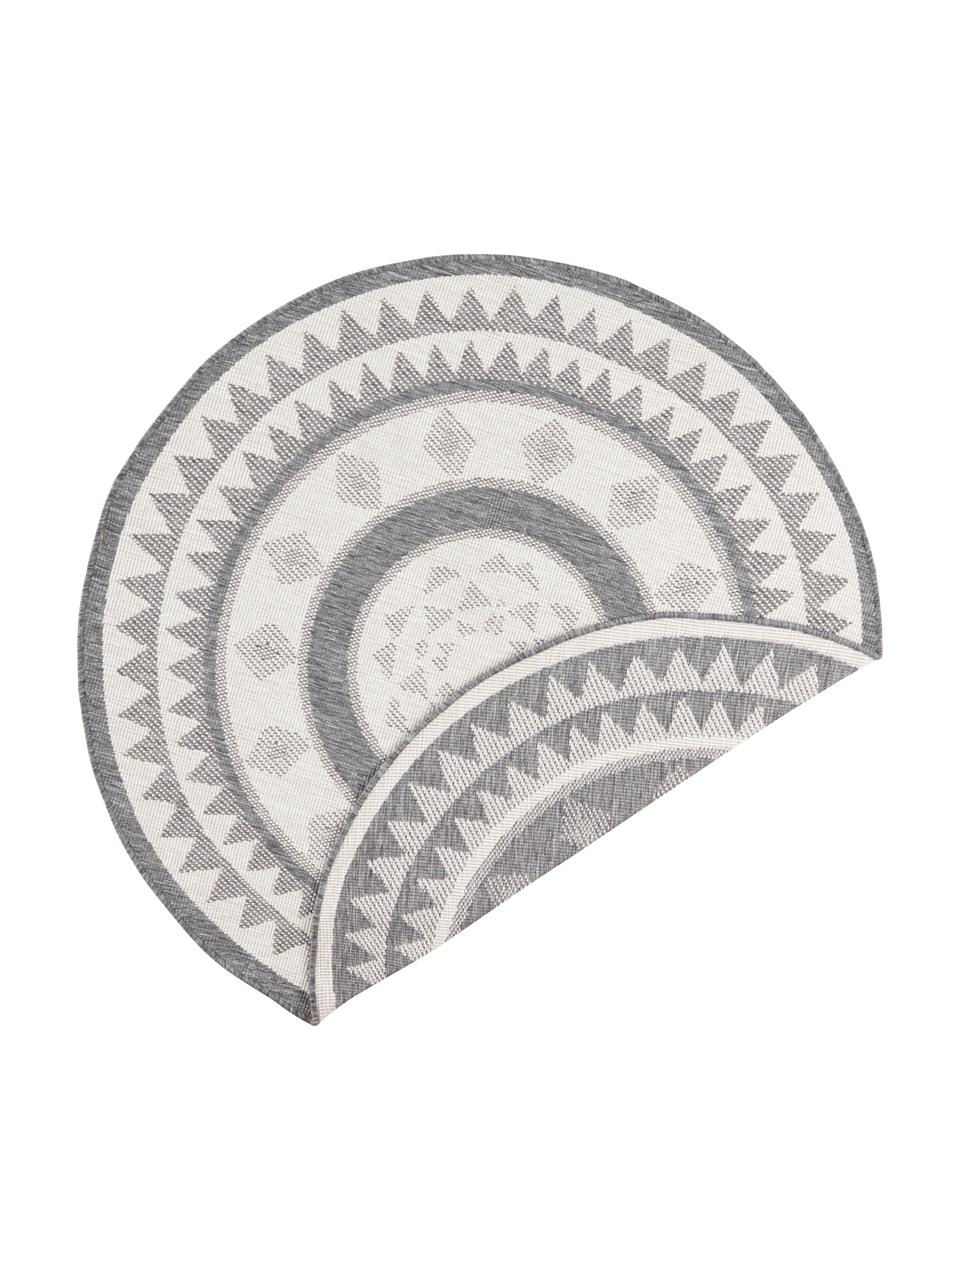 Alfombra redonda reversible de interior/exterior Jamaica, Gris, crema, Ø 200 cm (Tamaño L)